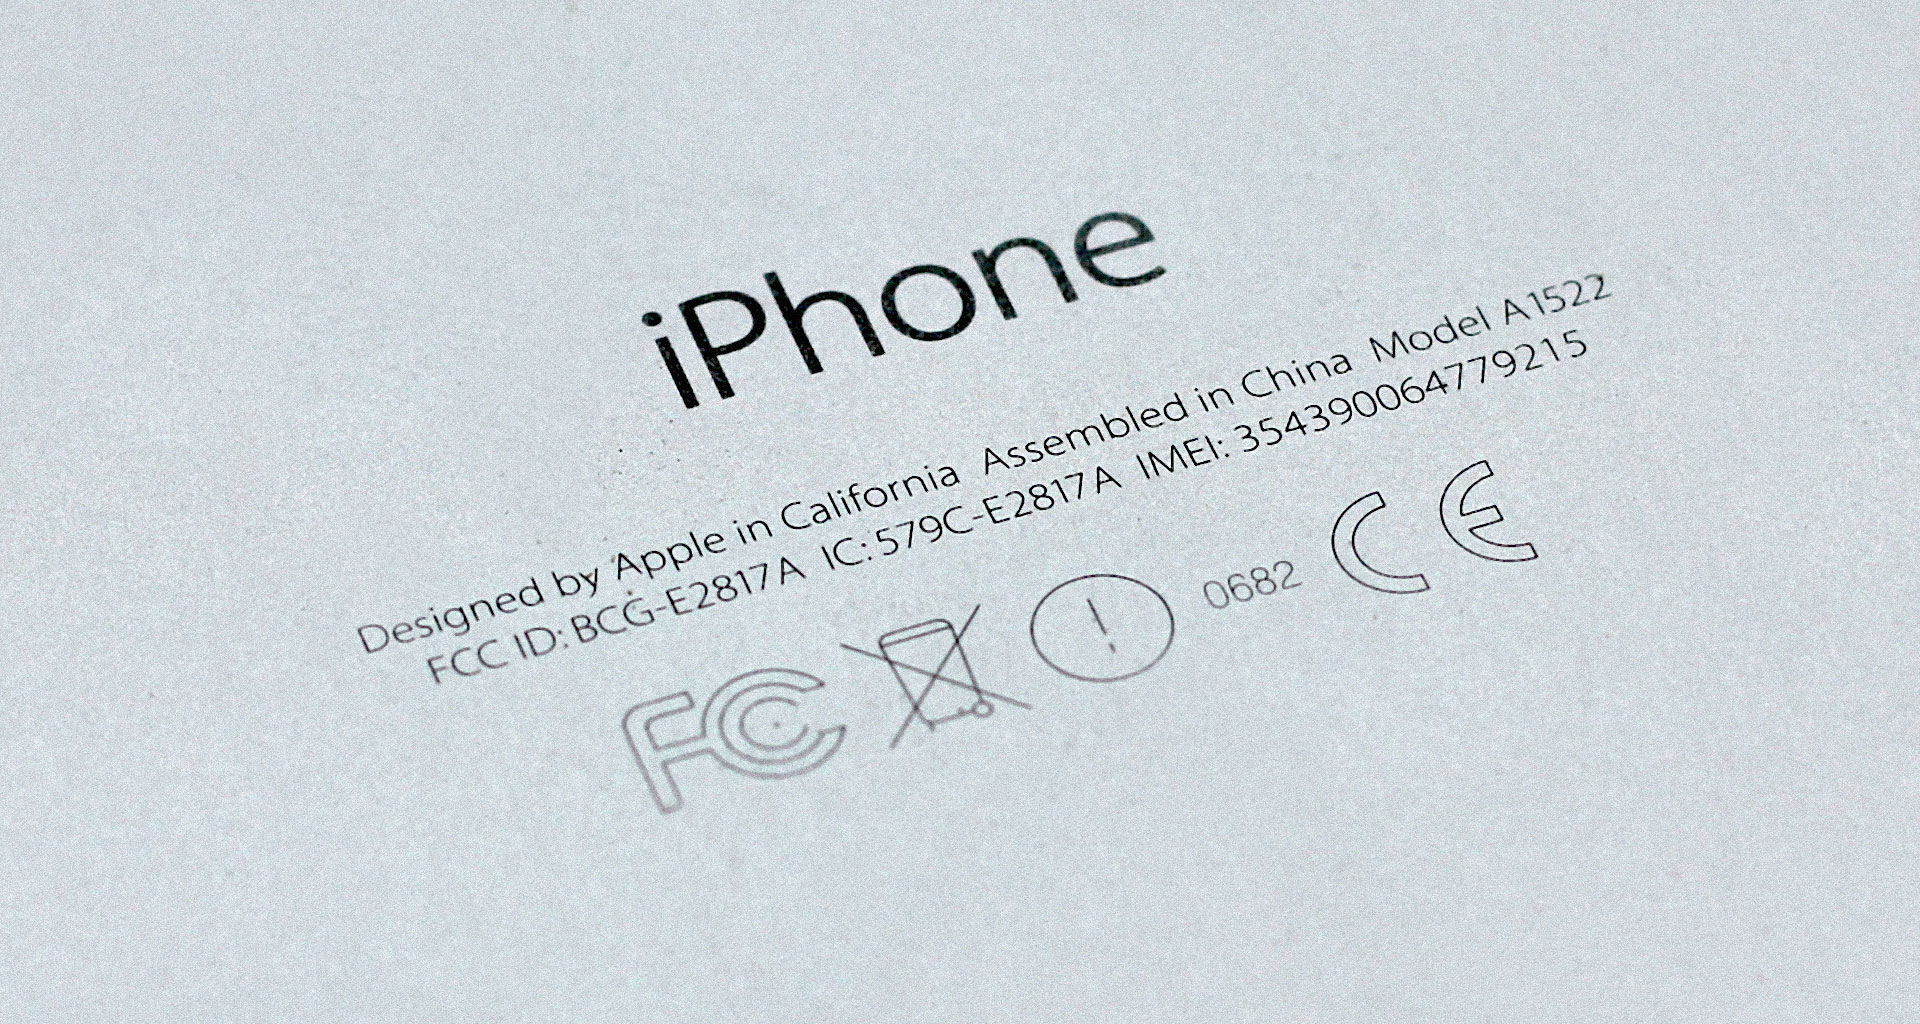 iphone - designed by apple in California, assembled in China © Copyright Joseba Attard